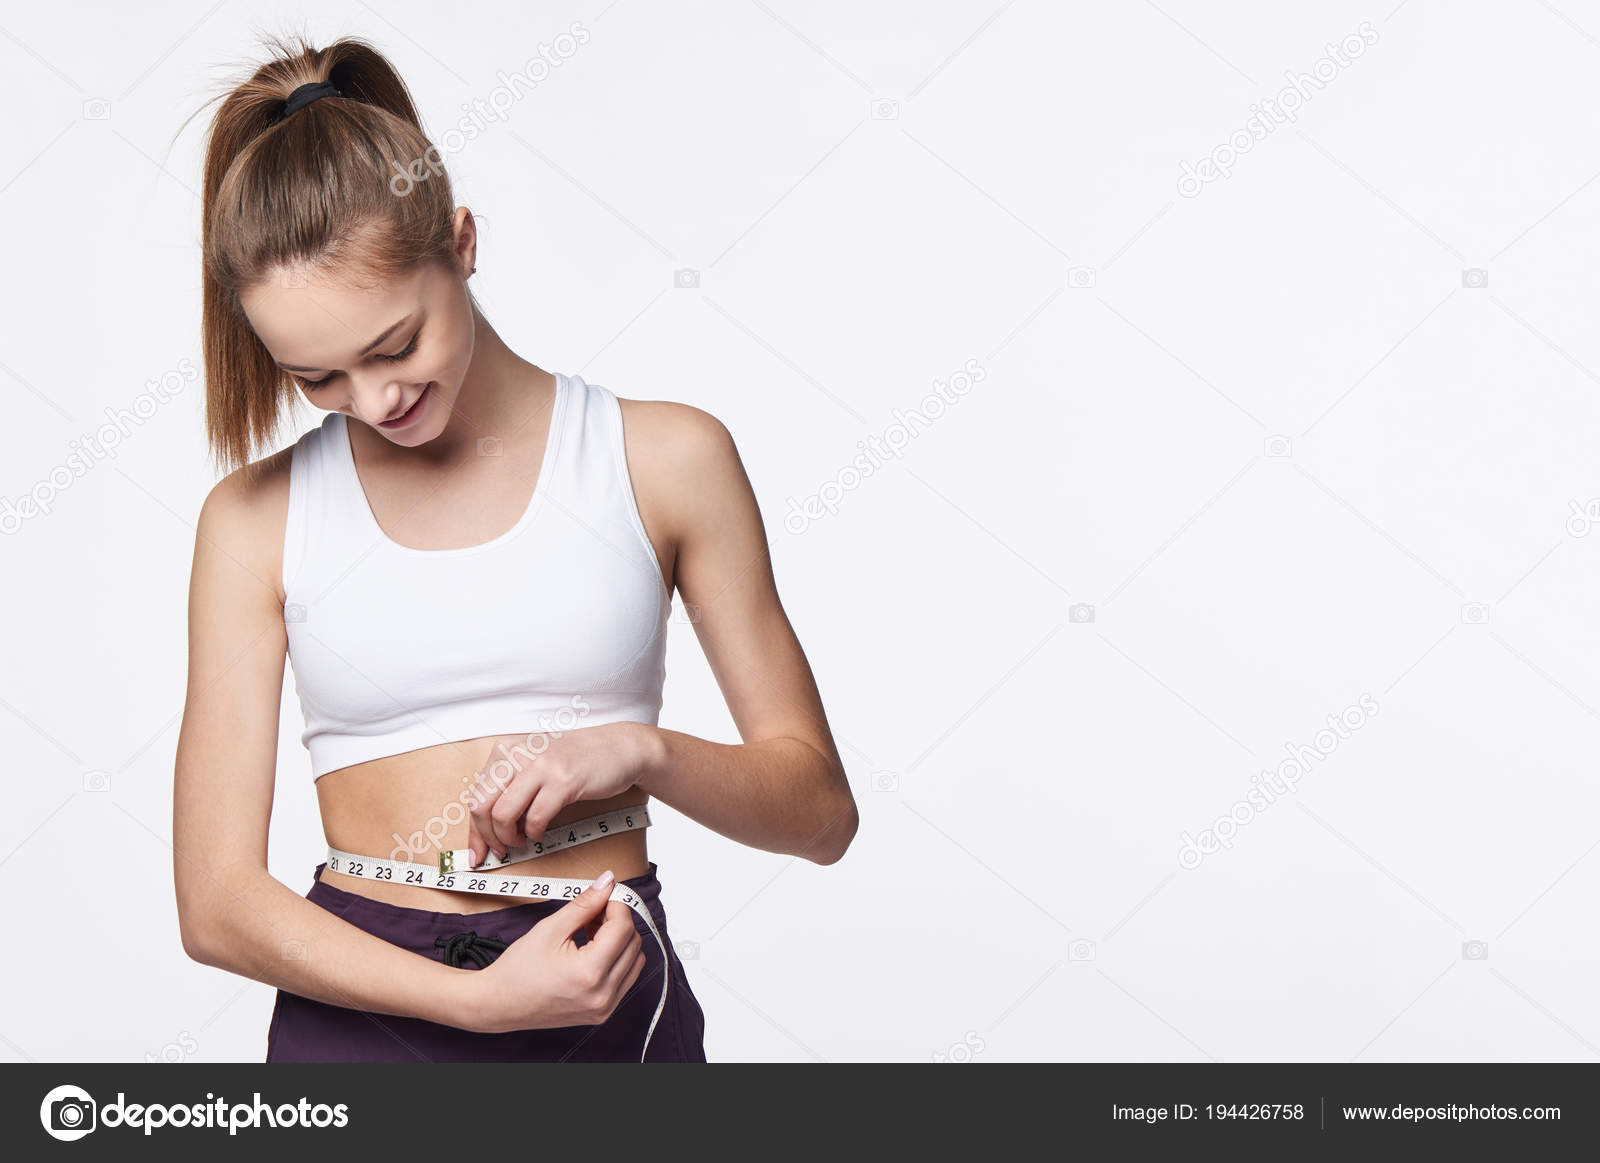 girl measuring her waist measuring tape, Stock image